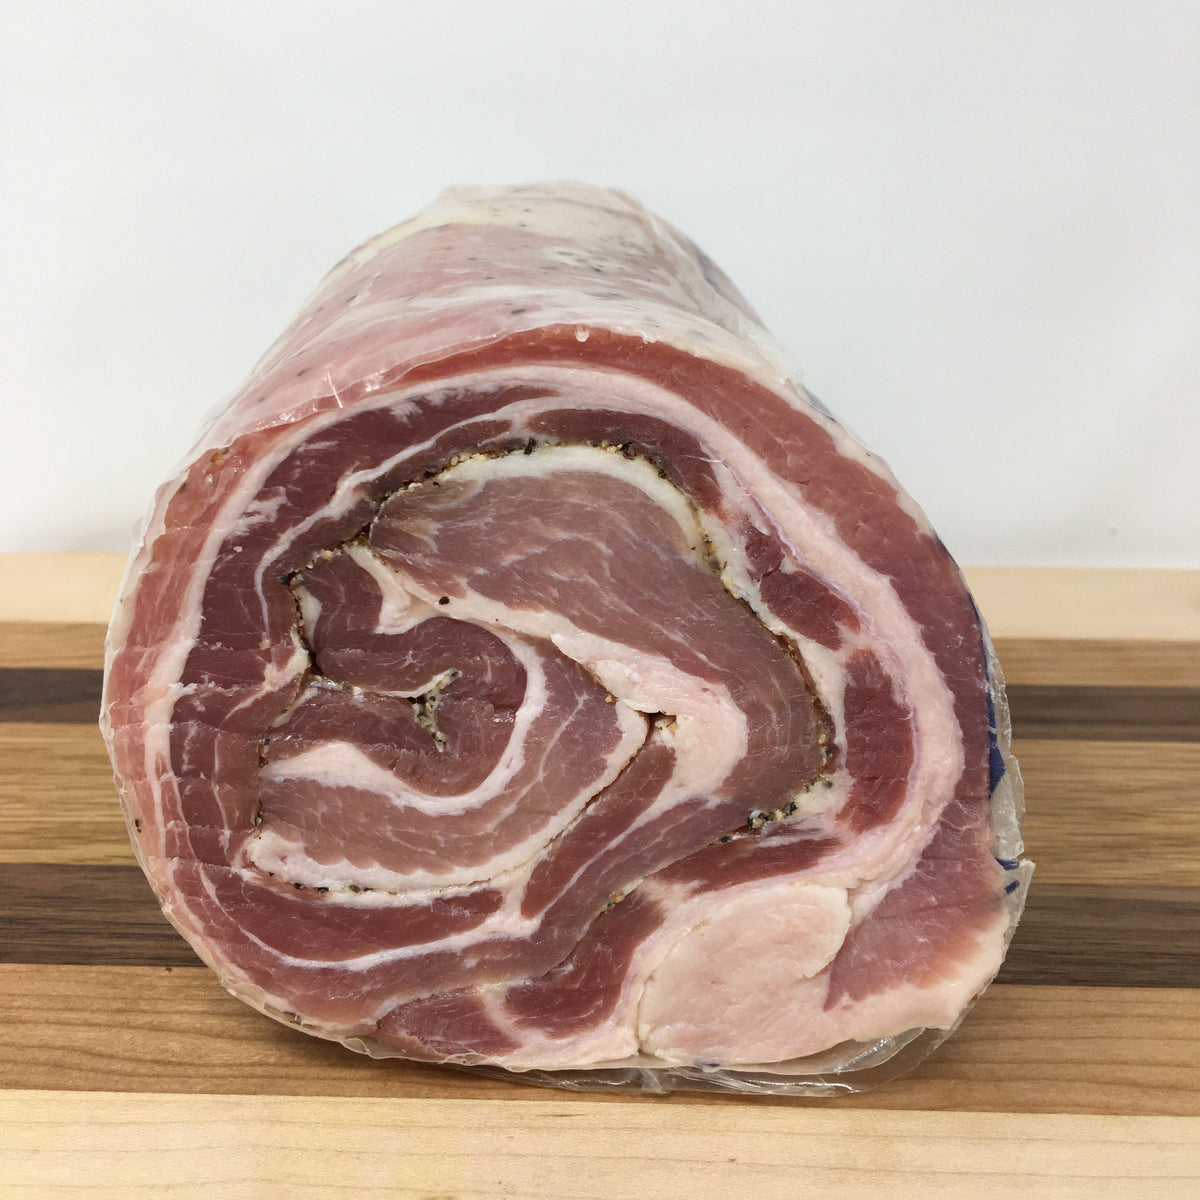 Madrange Jambon de Paris French Ham ($23.99/lb.) – Stand Alone